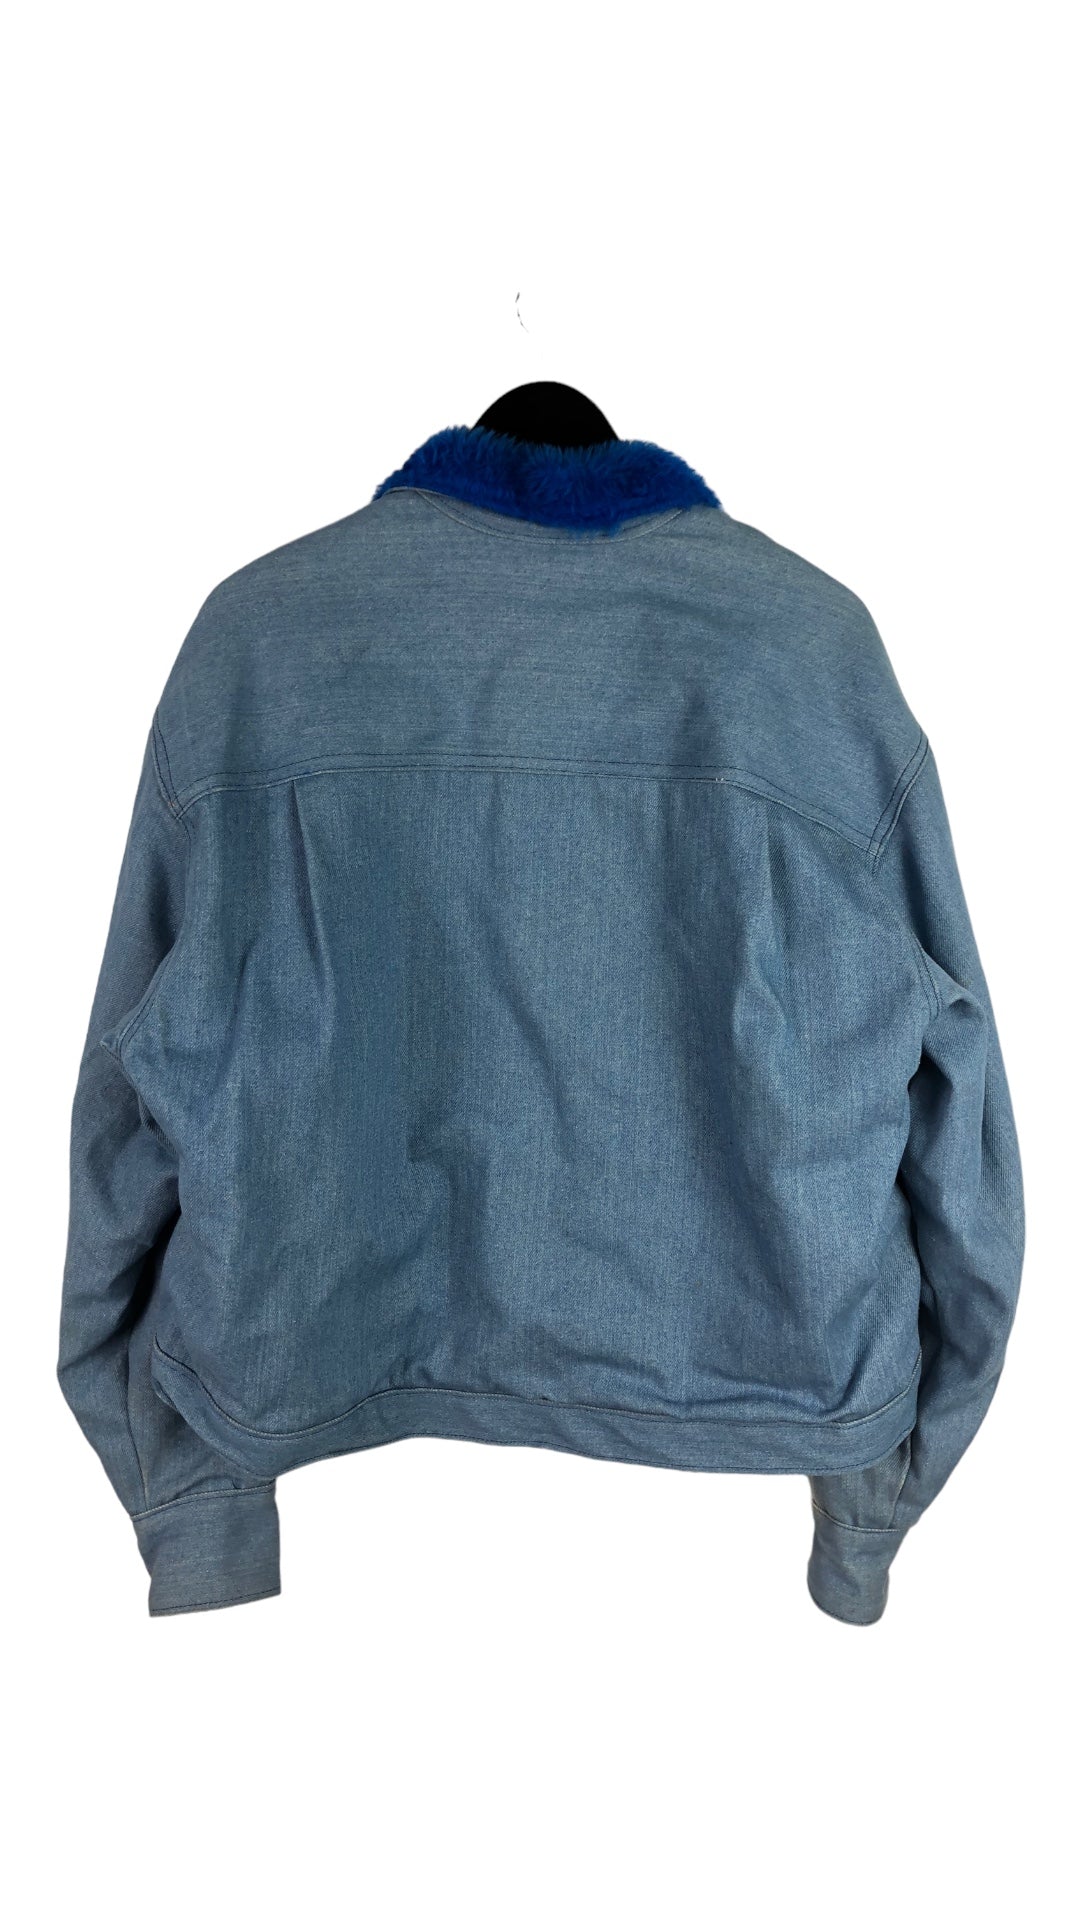 VTG Blue Denim Fur Collar Jacket Sz L